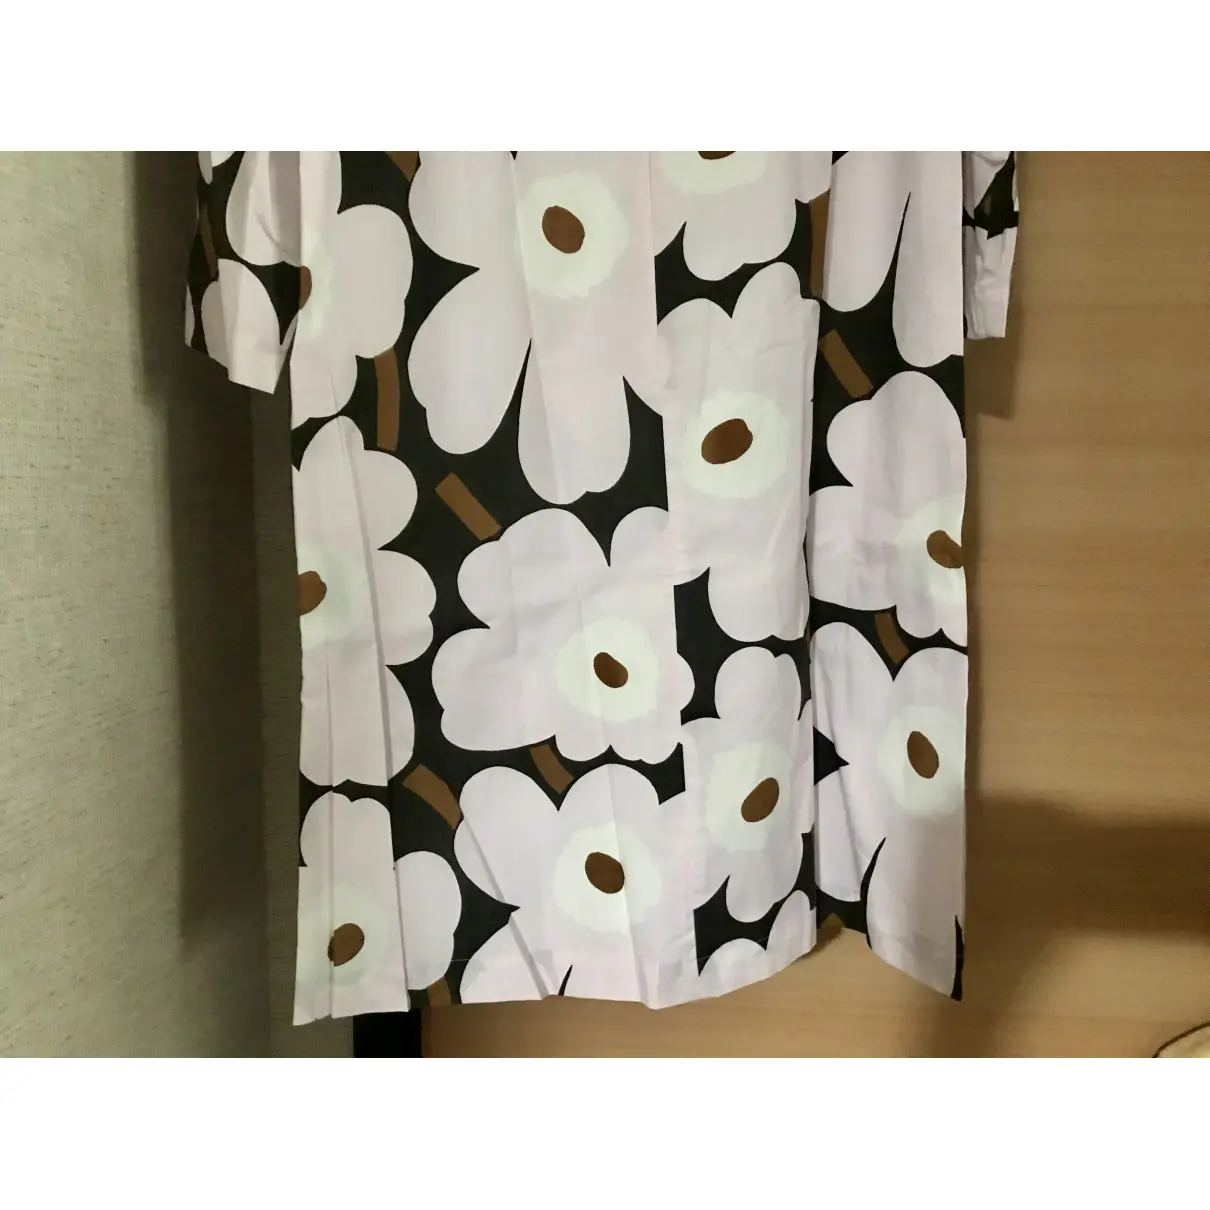 Buy Marimekko Mid-length dress online